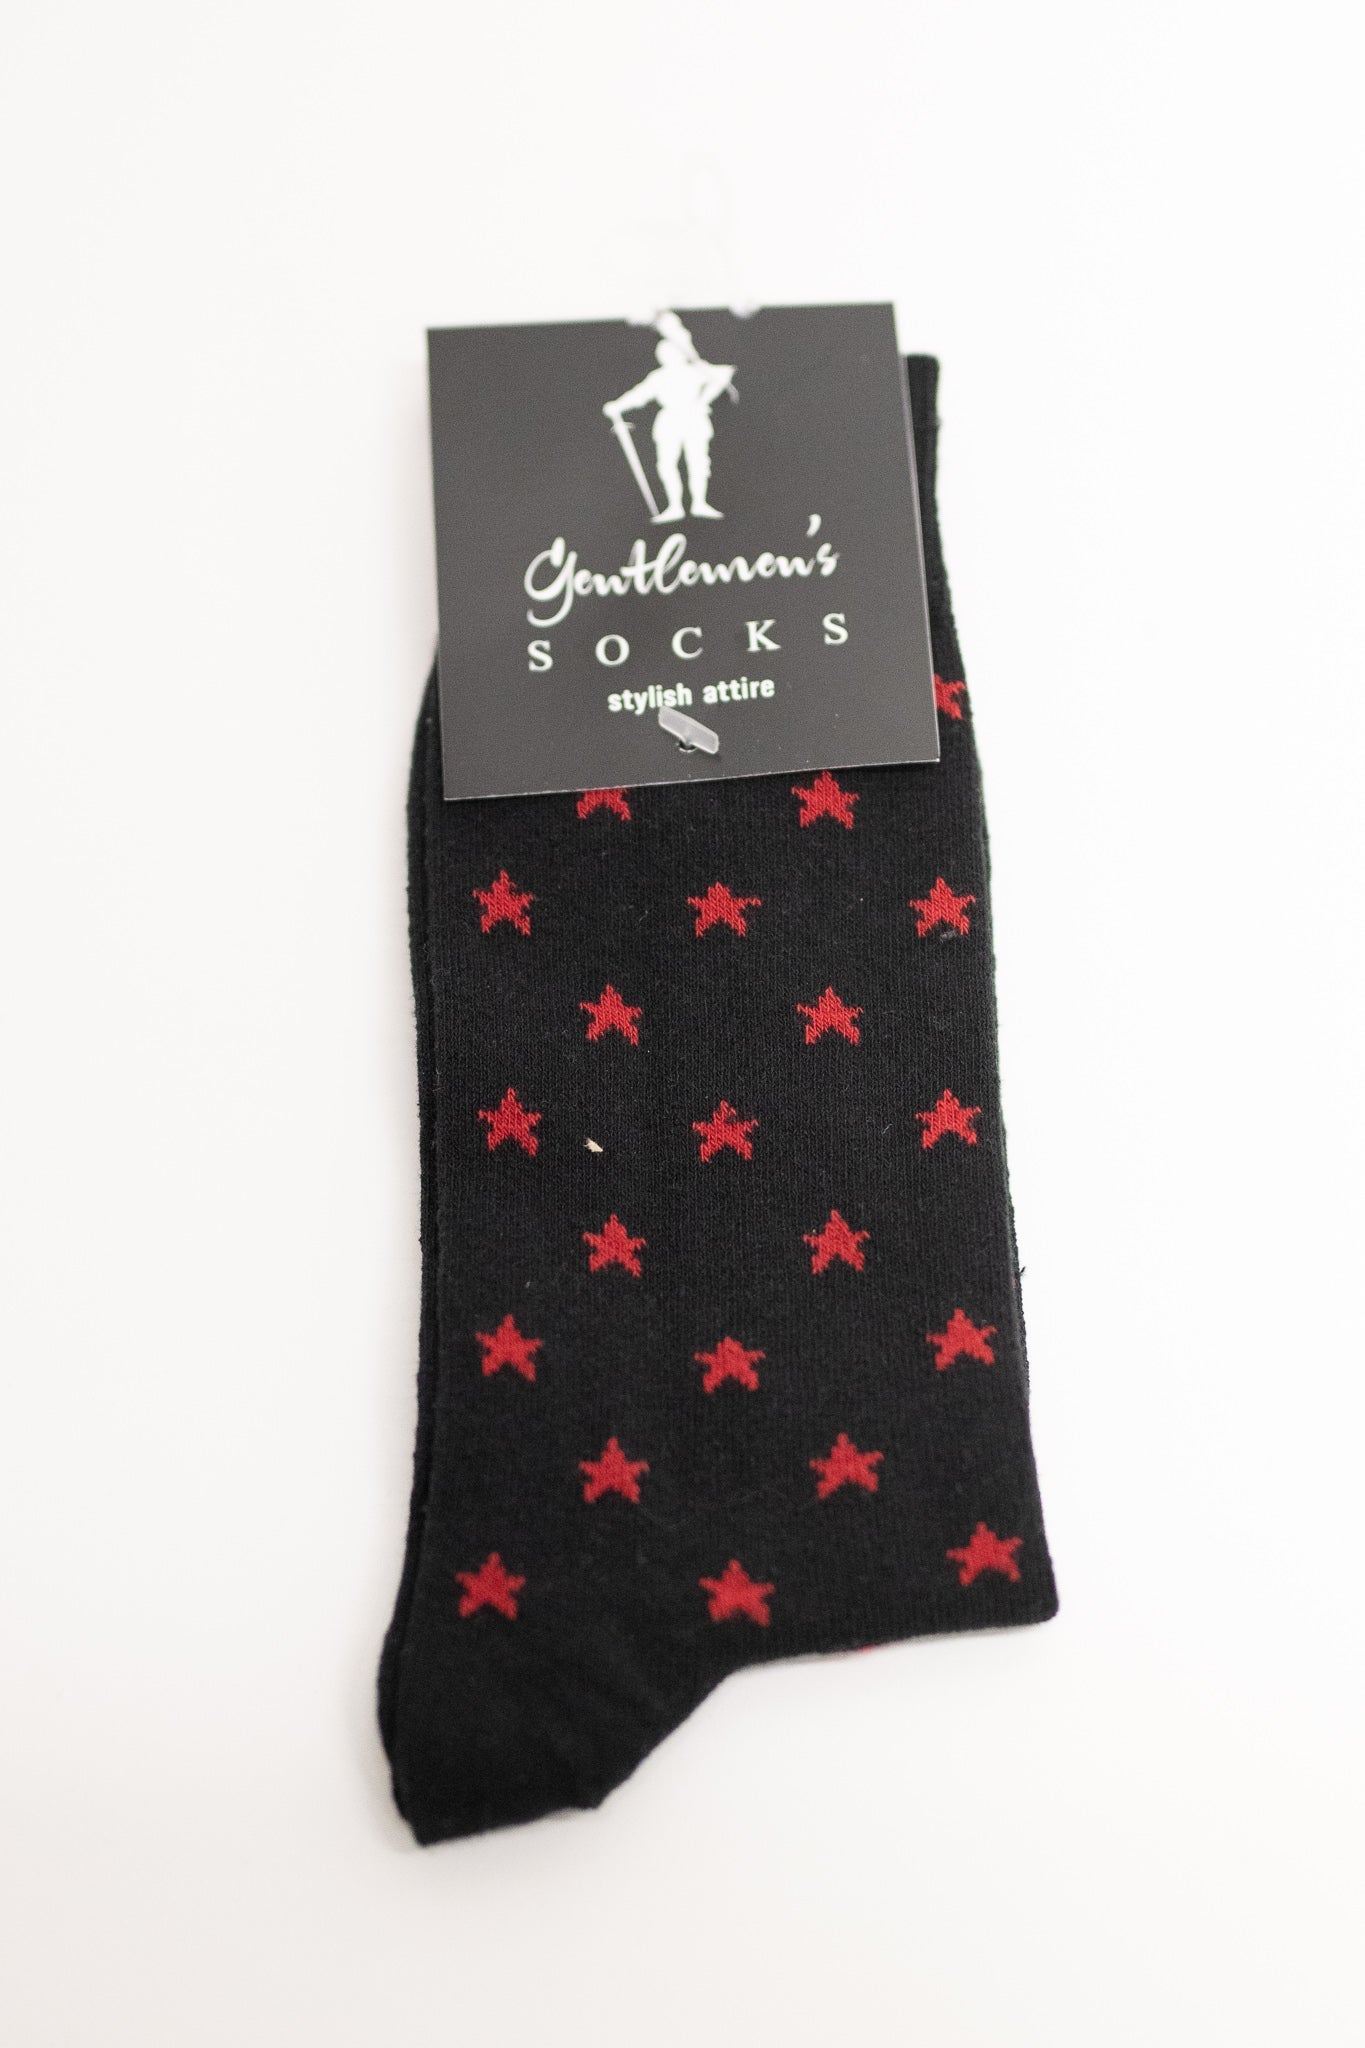 Gentlemen's Socks Black Socks with Red Stars One Size